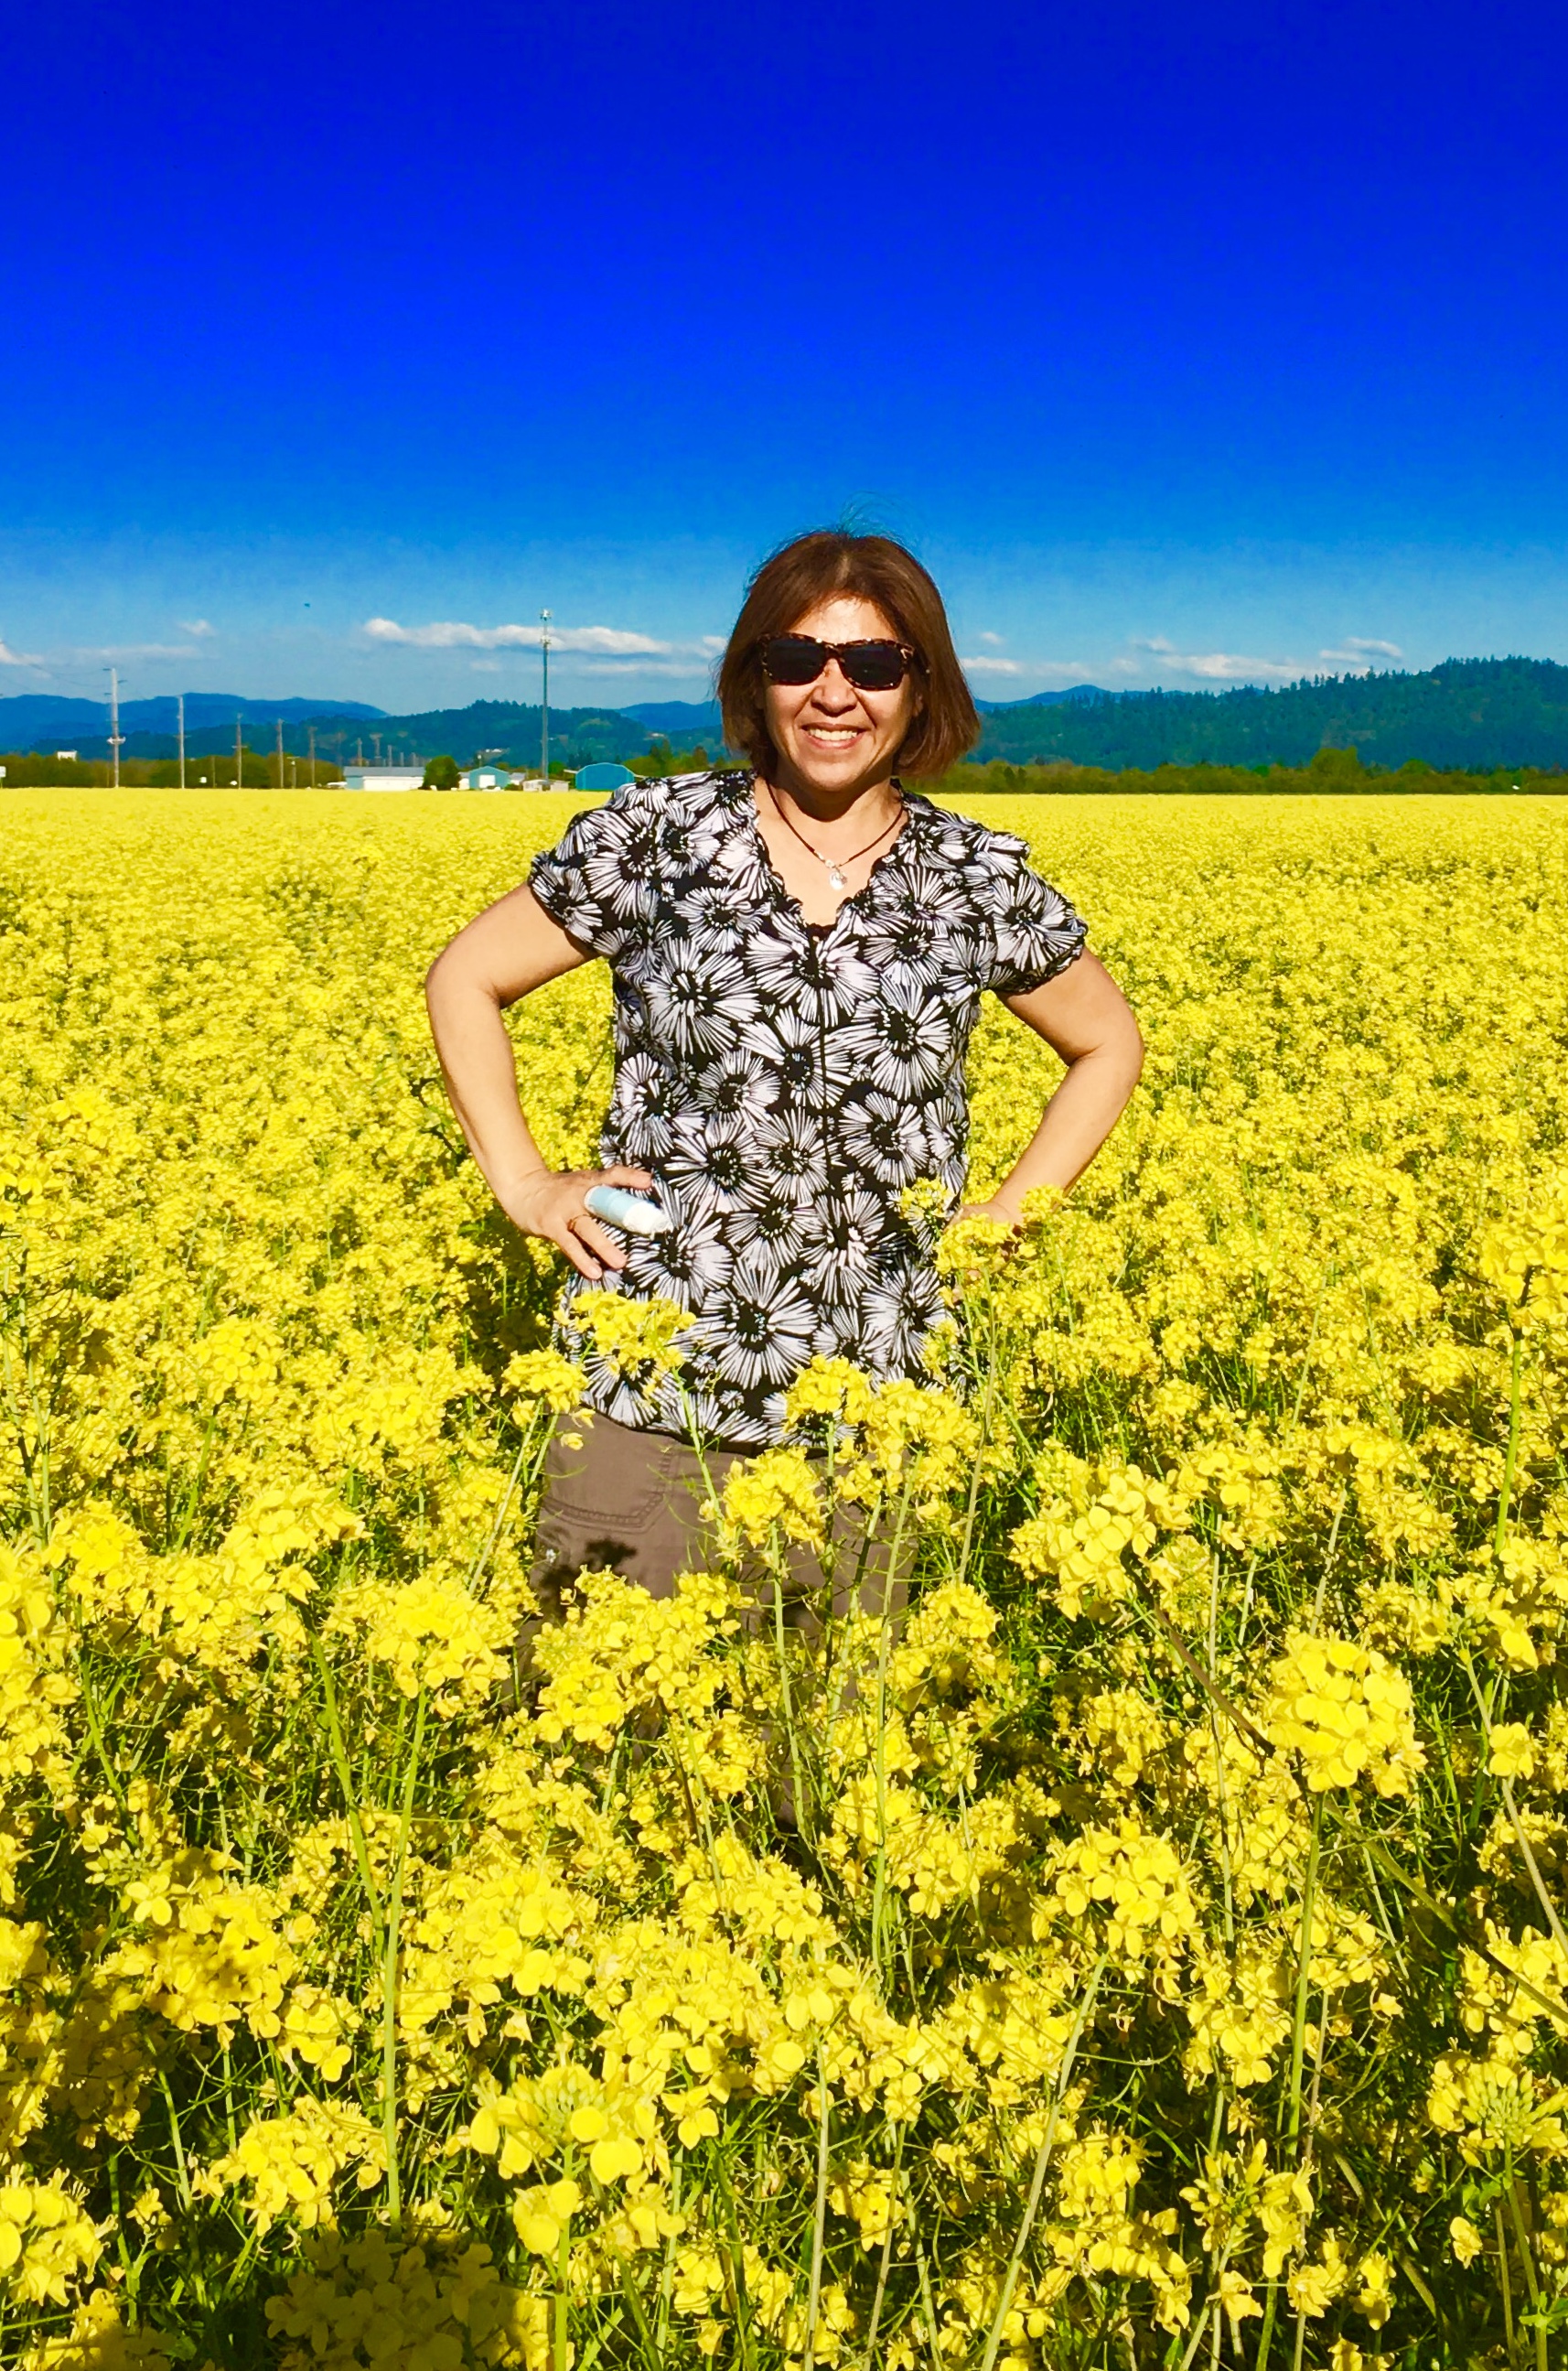 Melissa in the mustard field